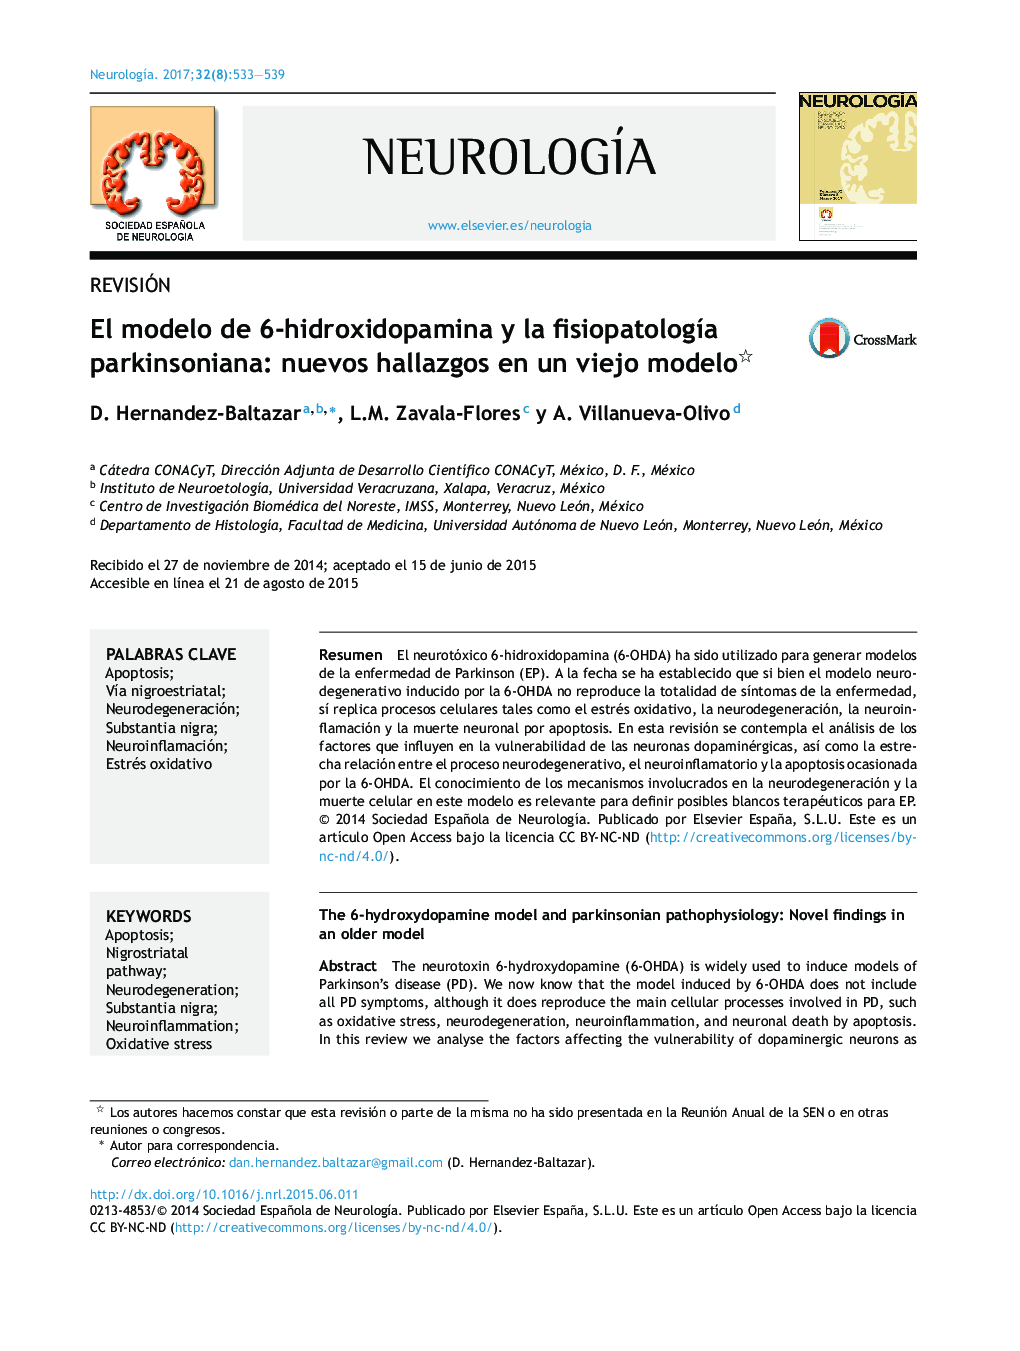 RevisiónEl modelo de 6-hidroxidopamina y la fisiopatologÃ­a parkinsoniana: nuevos hallazgos en un viejo modeloThe 6-hydroxydopamine model and parkinsonian pathophysiology: Novel findings in an older model